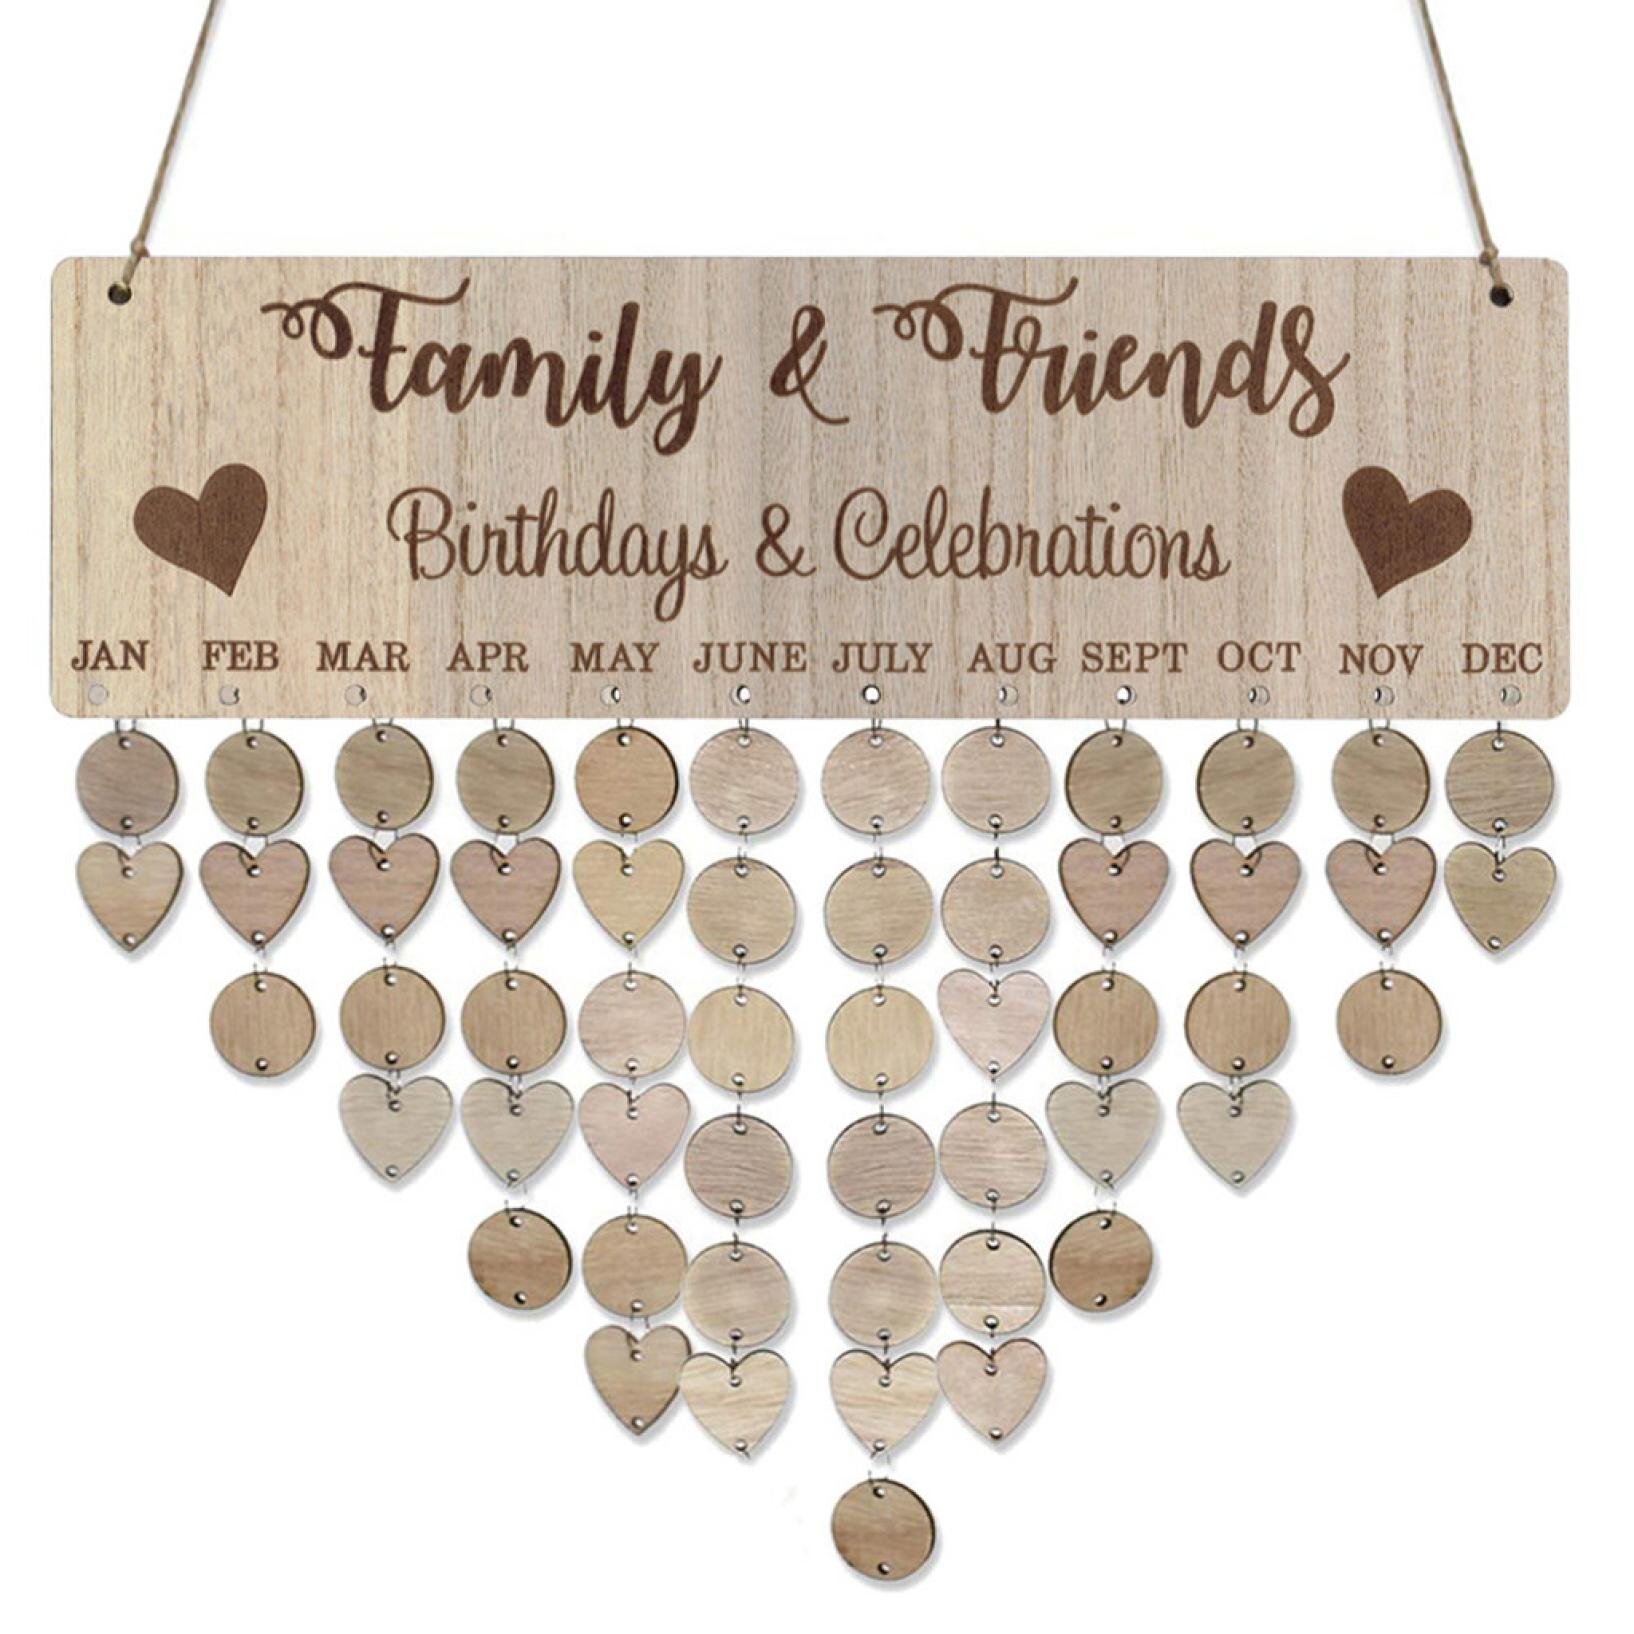 Family Birthday Board Birthday Reminder Wooden Plaque Anniversary Calendar